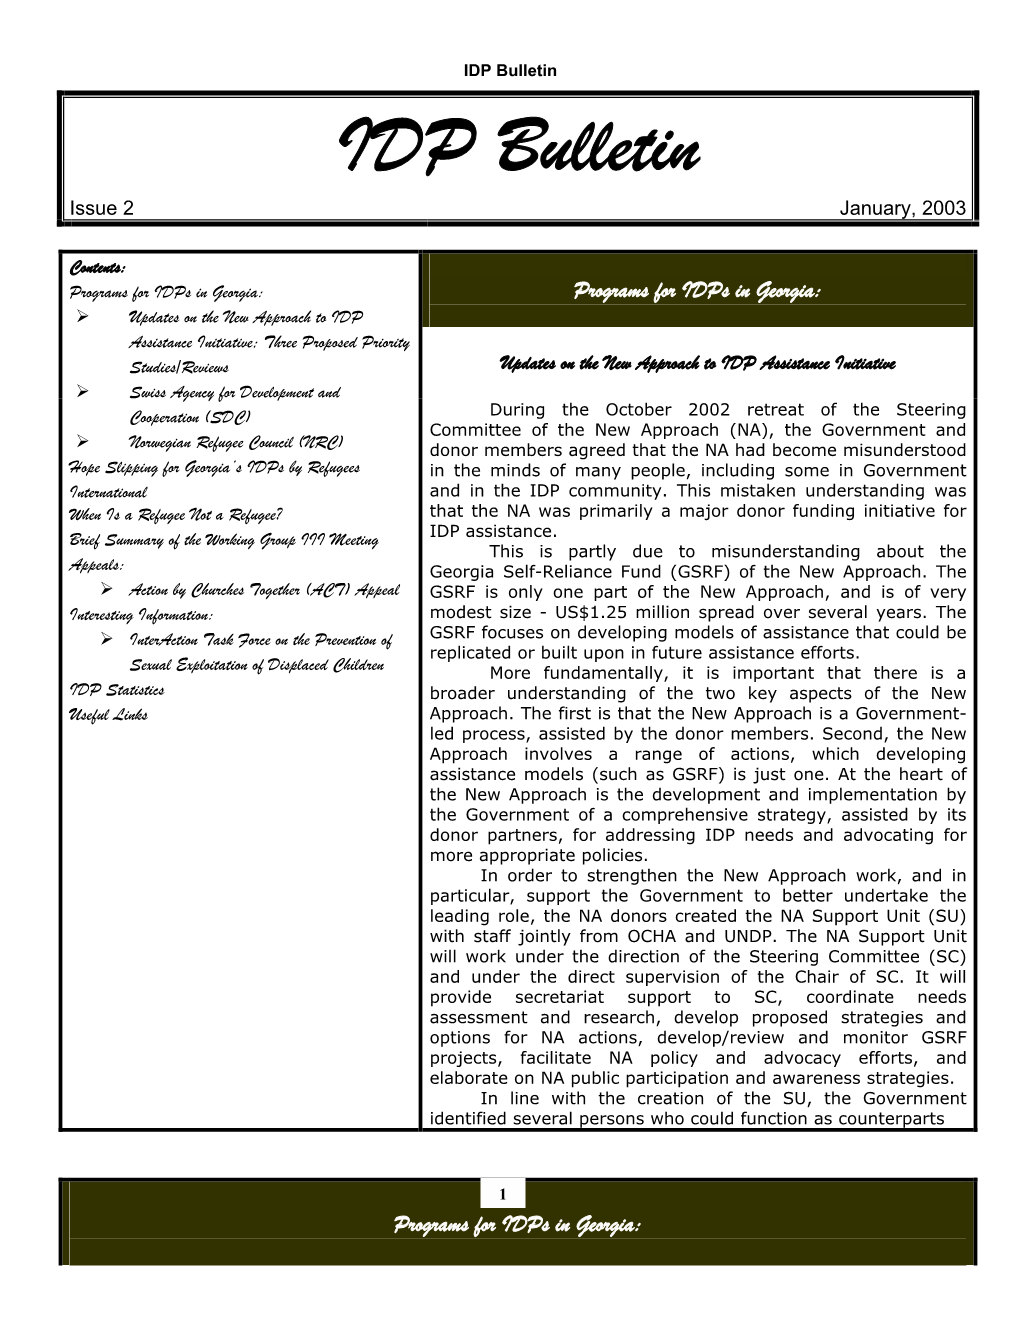 IDP Bulletin IDP Bulletin Issue 2 January, 2003